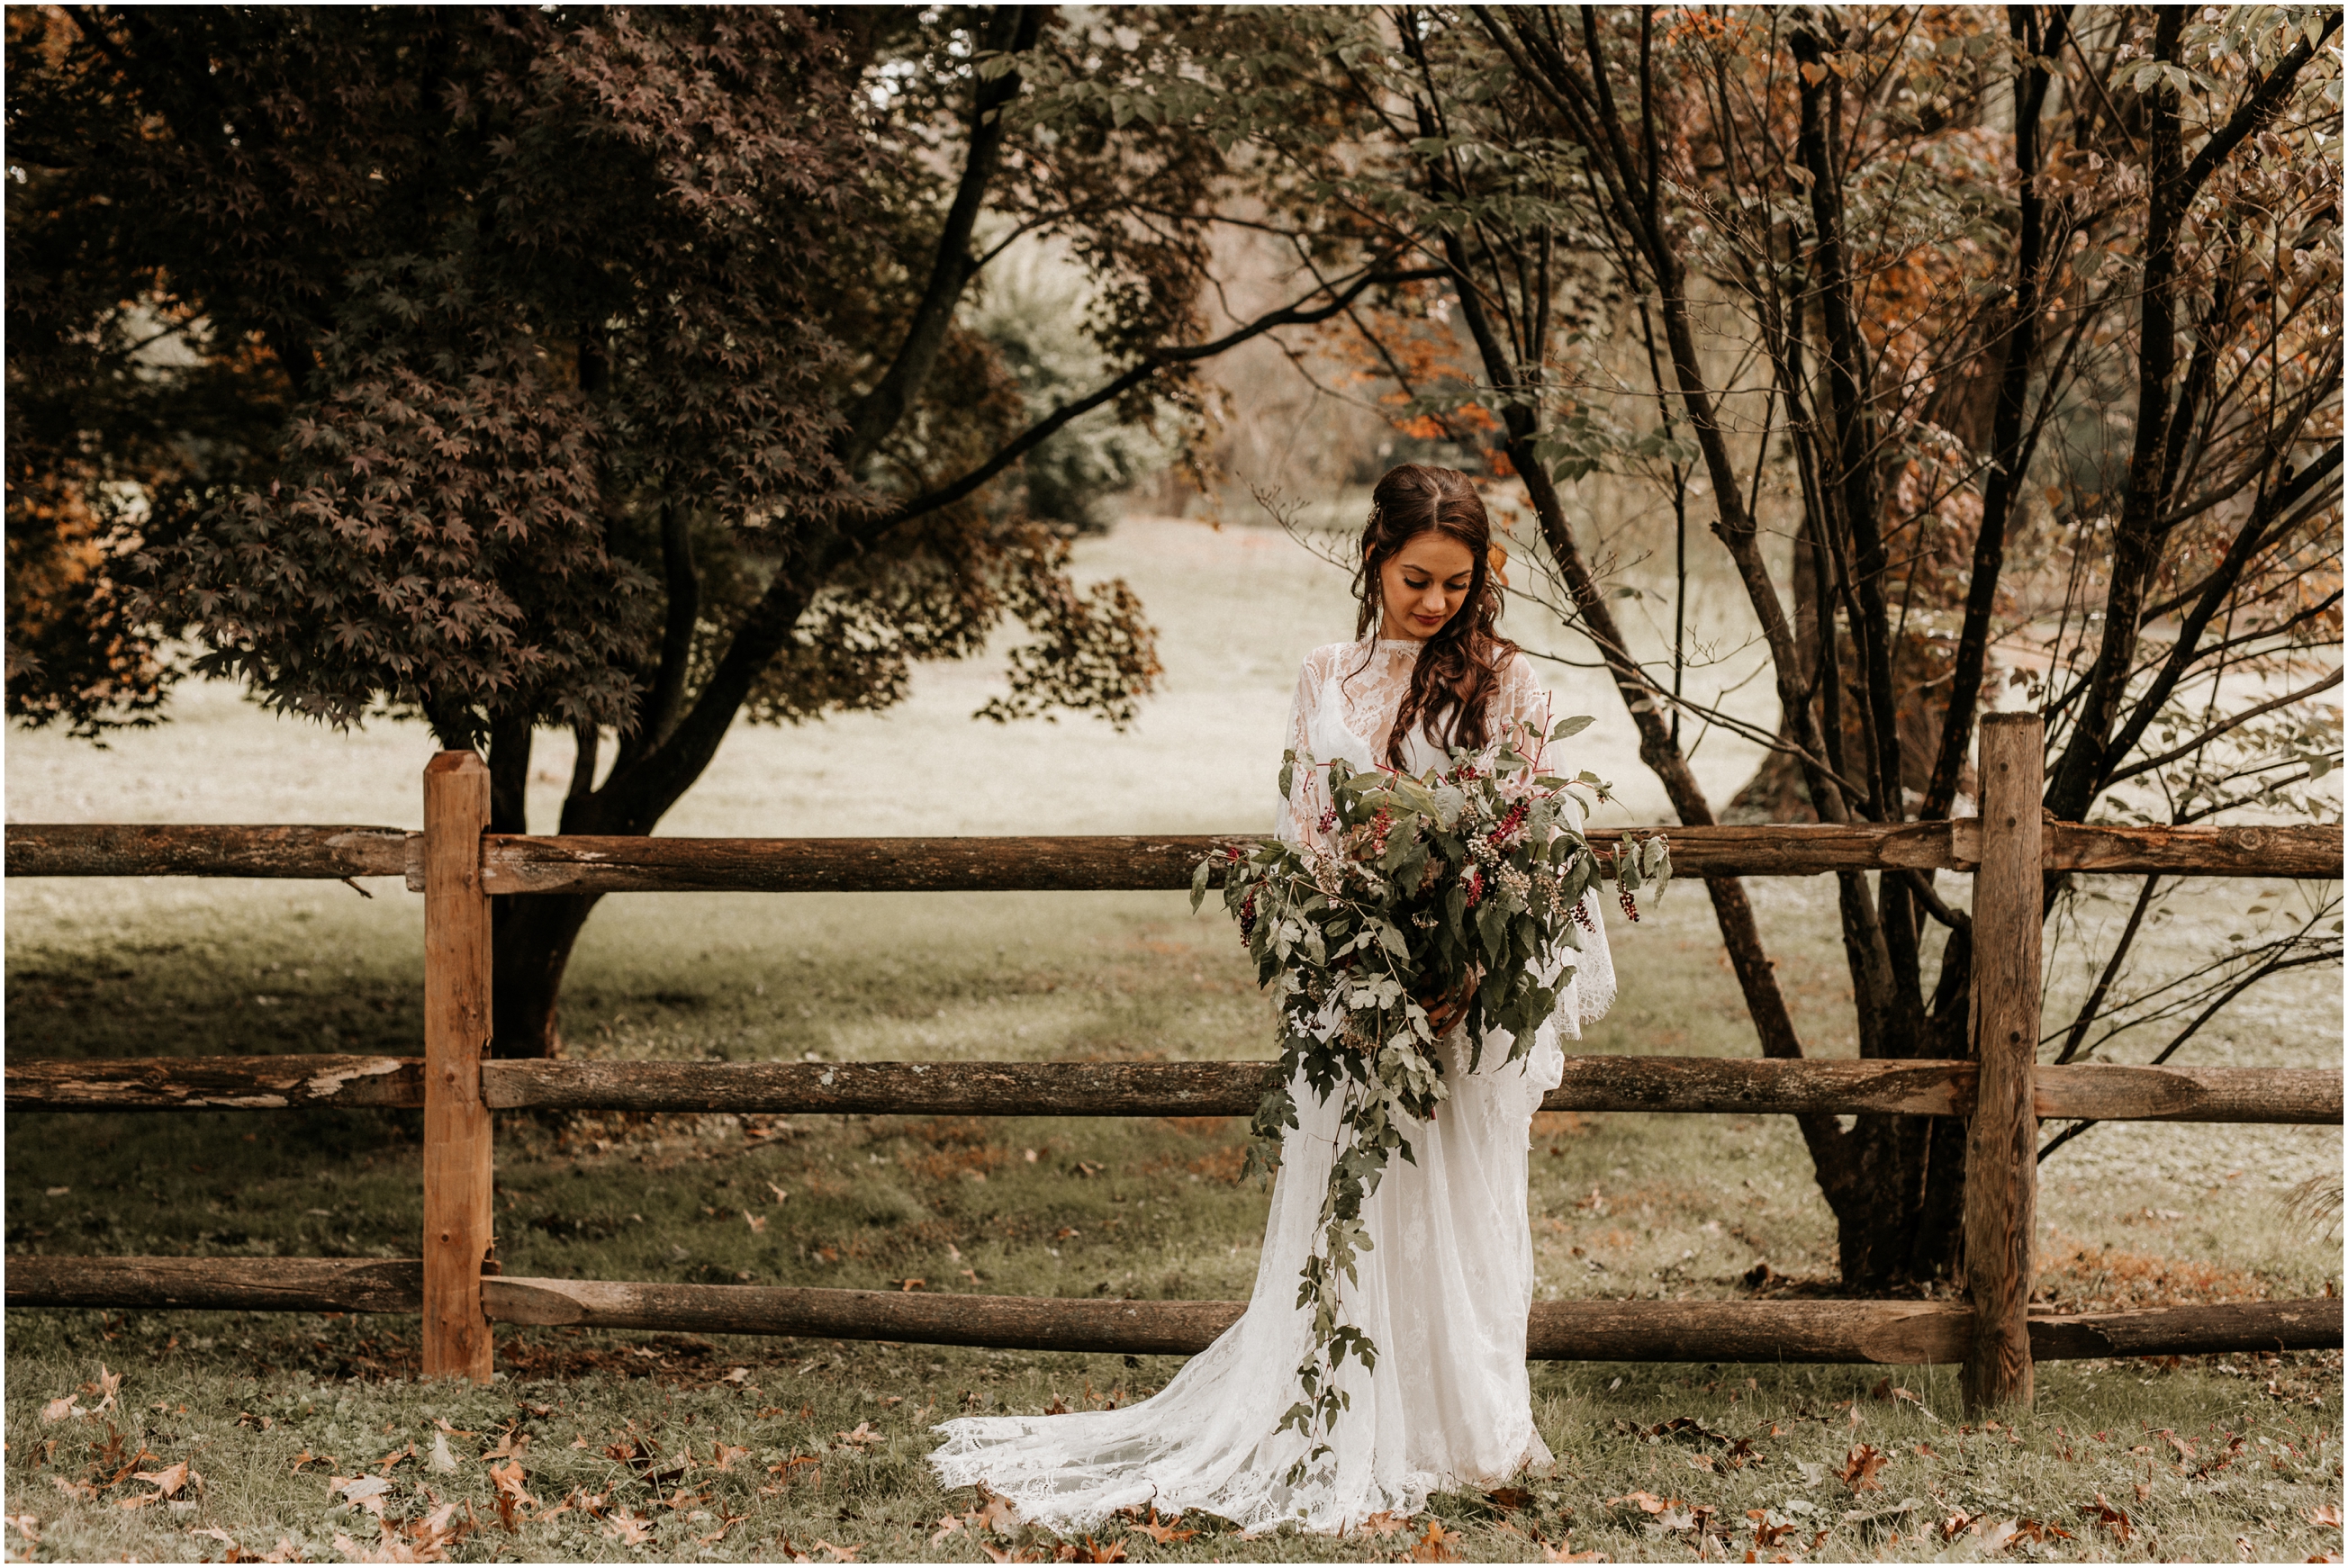 Intimate Elopement Wedding Backyard Adventurous Fall October Wedding New Jersey PA Pennsylvania NJ Wedding Photographer